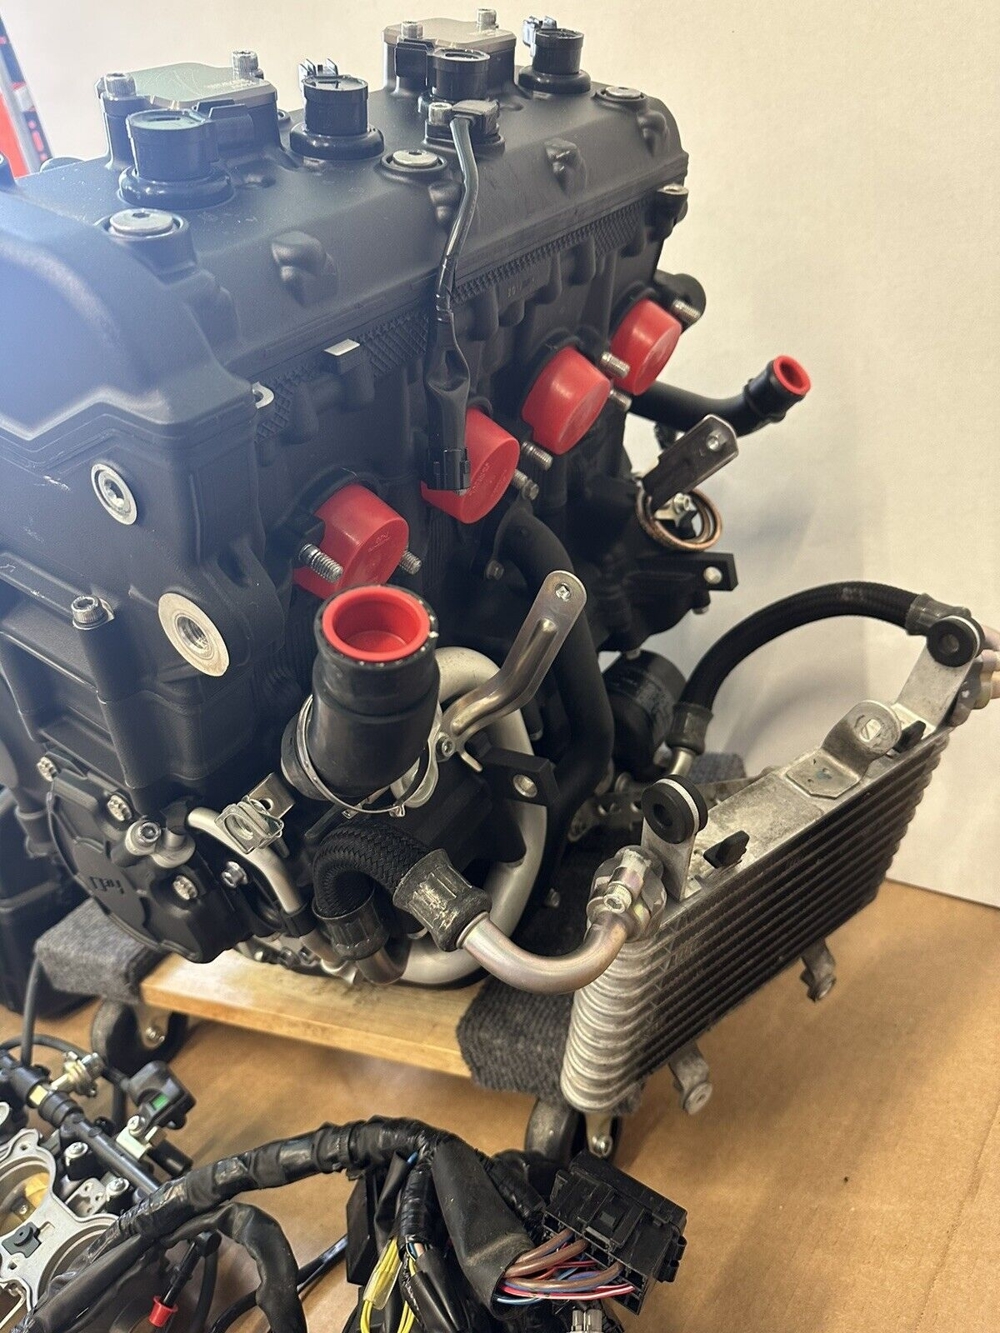 2020 20-21 Yamaha R1 YZF R1 Complete Engine Motor Dwarf Car Kit 1900 Miles